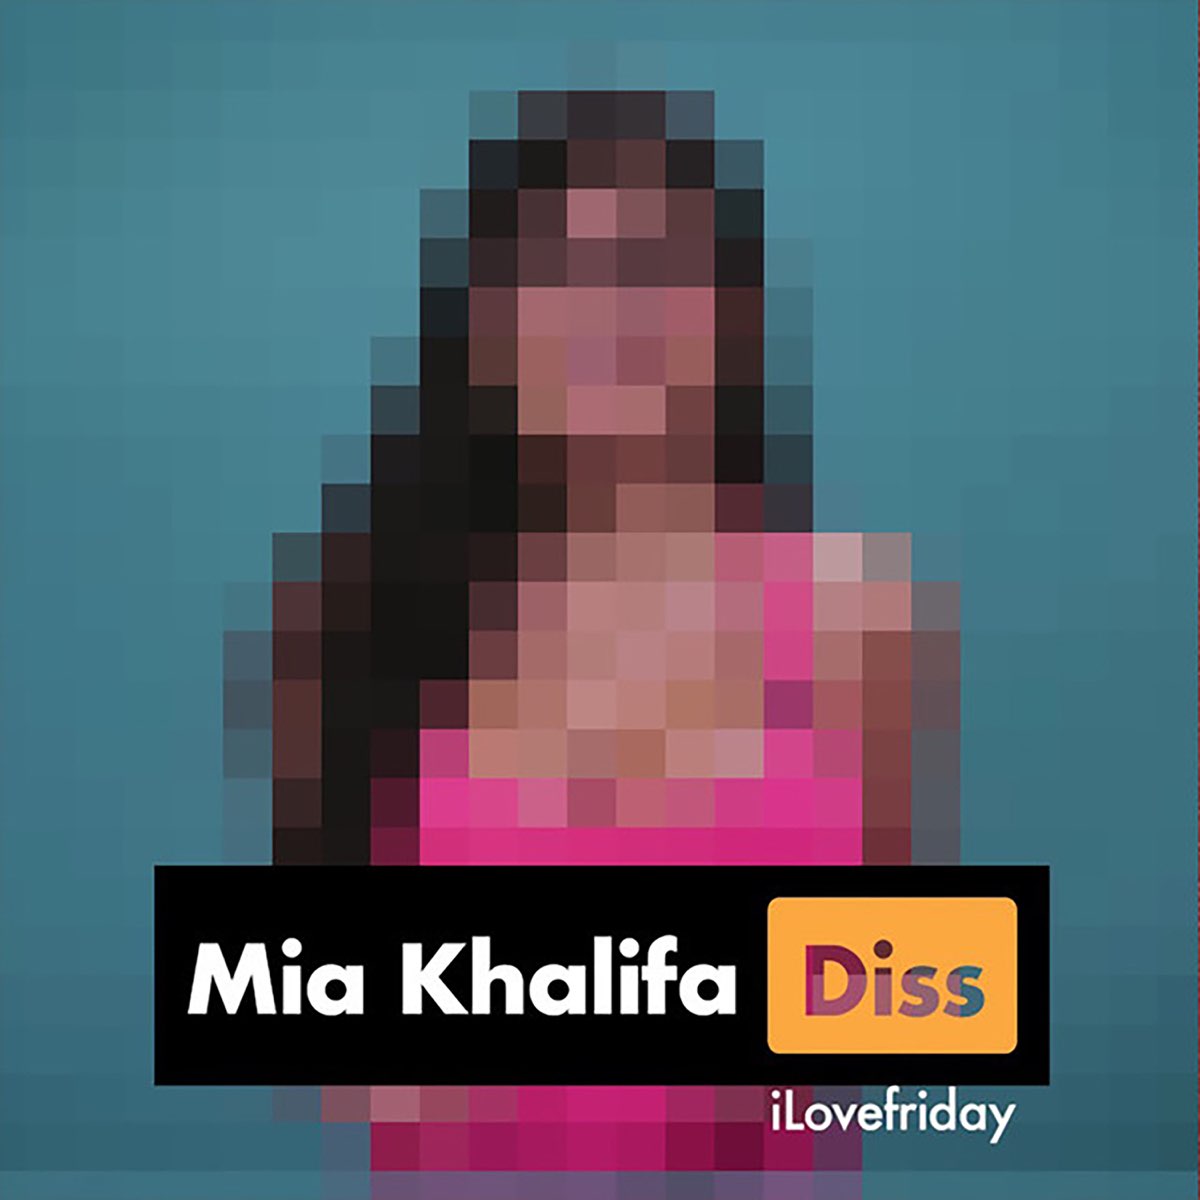 Mia khalifa перевод песни